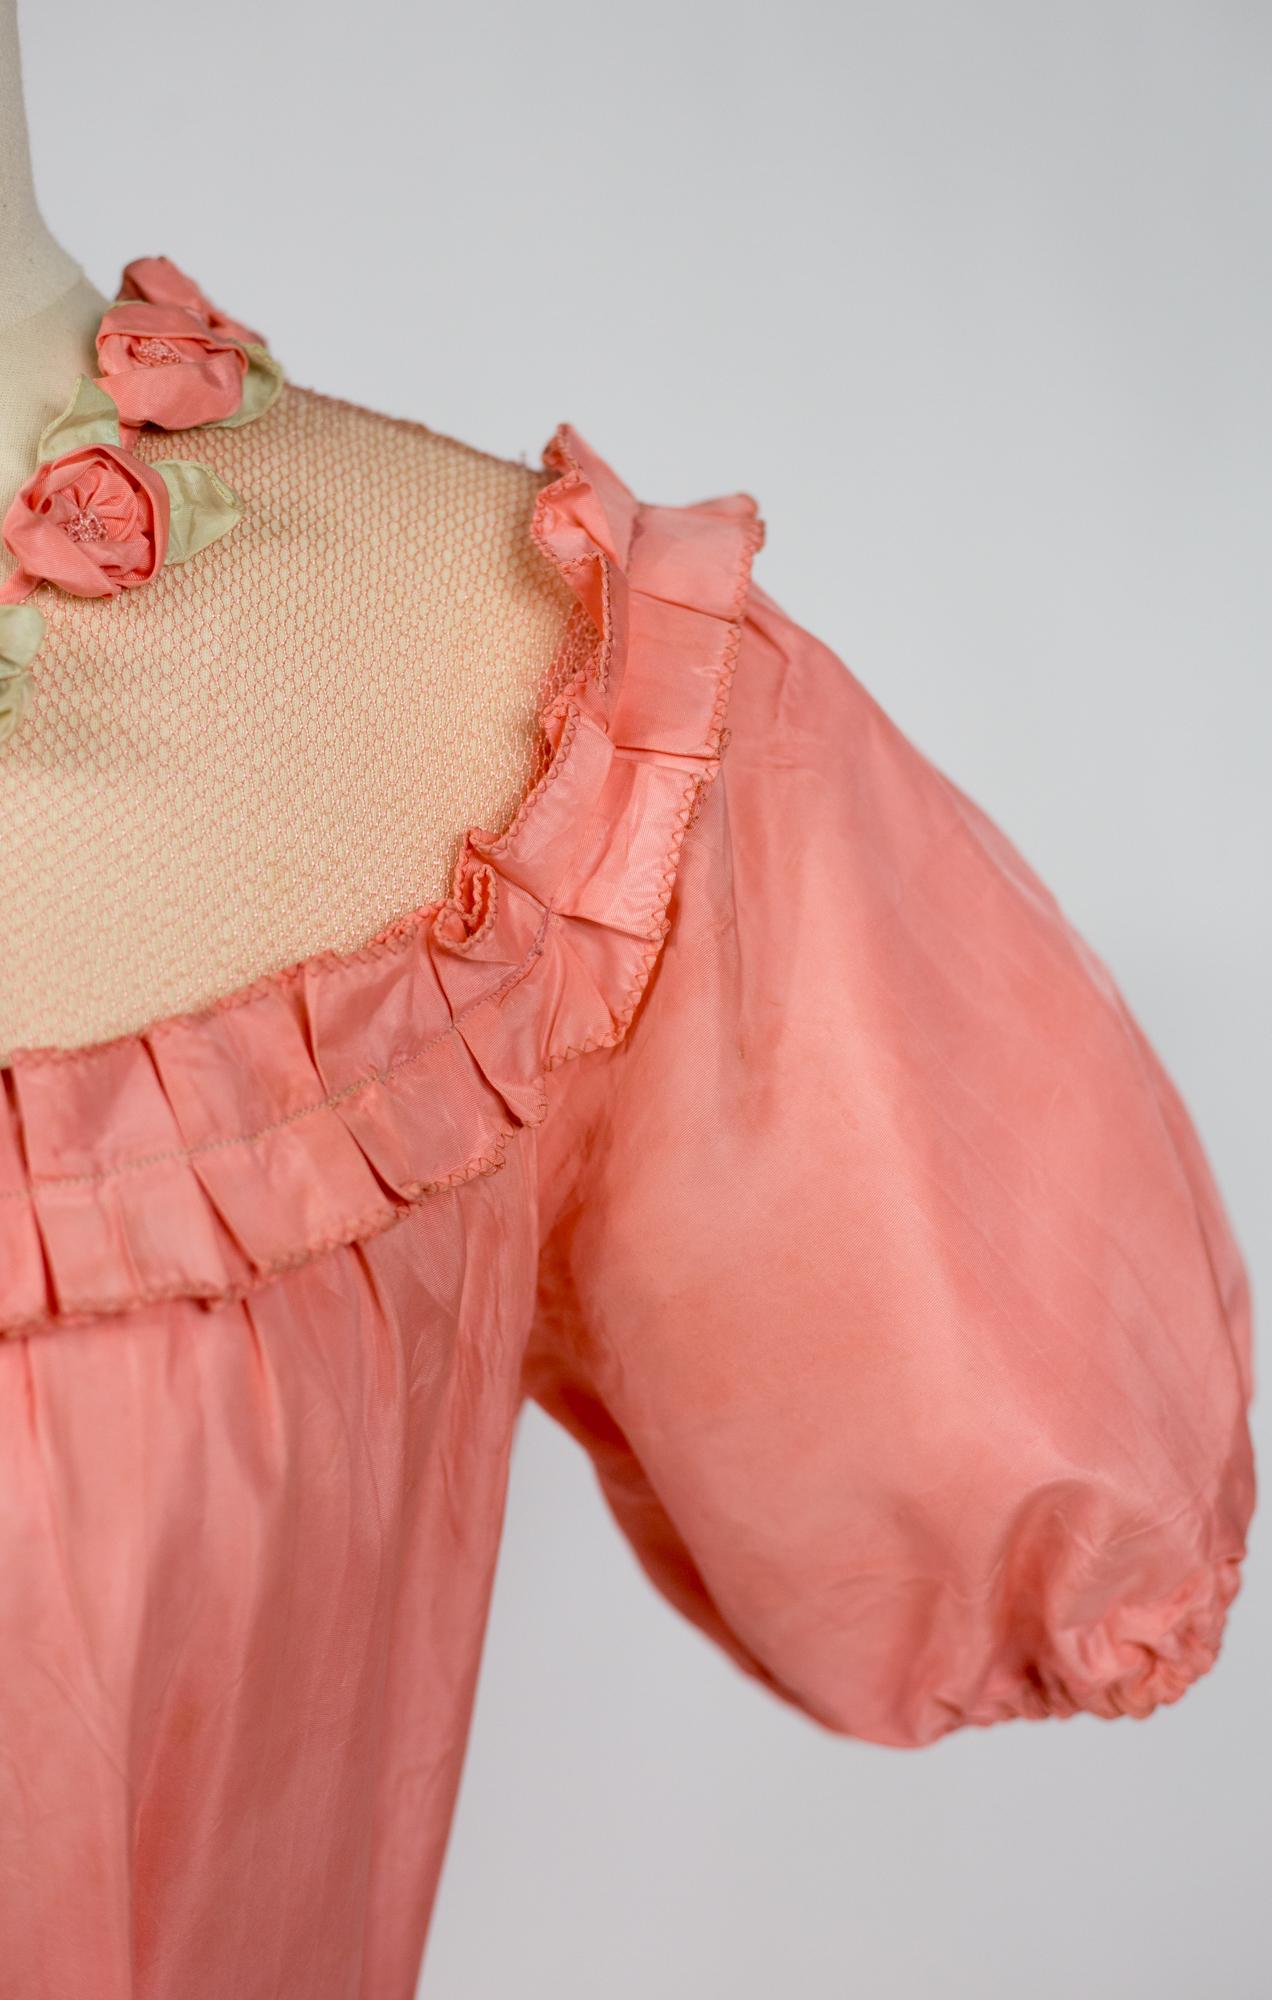 Women's A French Summer Dress In Rayonne Taffeta Fabric Circa 1920/1930 For Sale